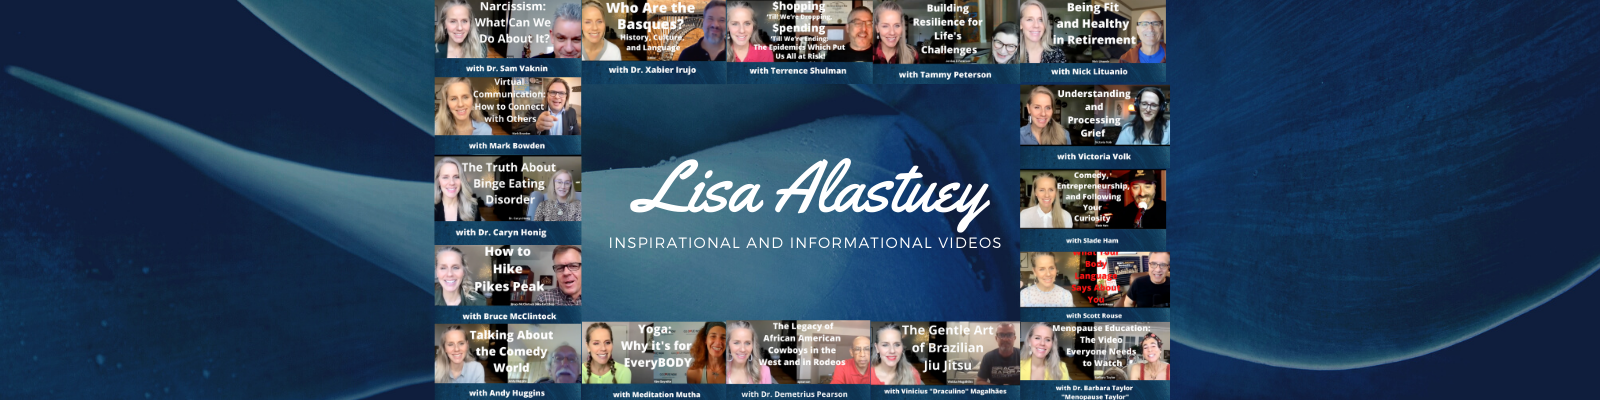 The Lisa Alastuey Podcast